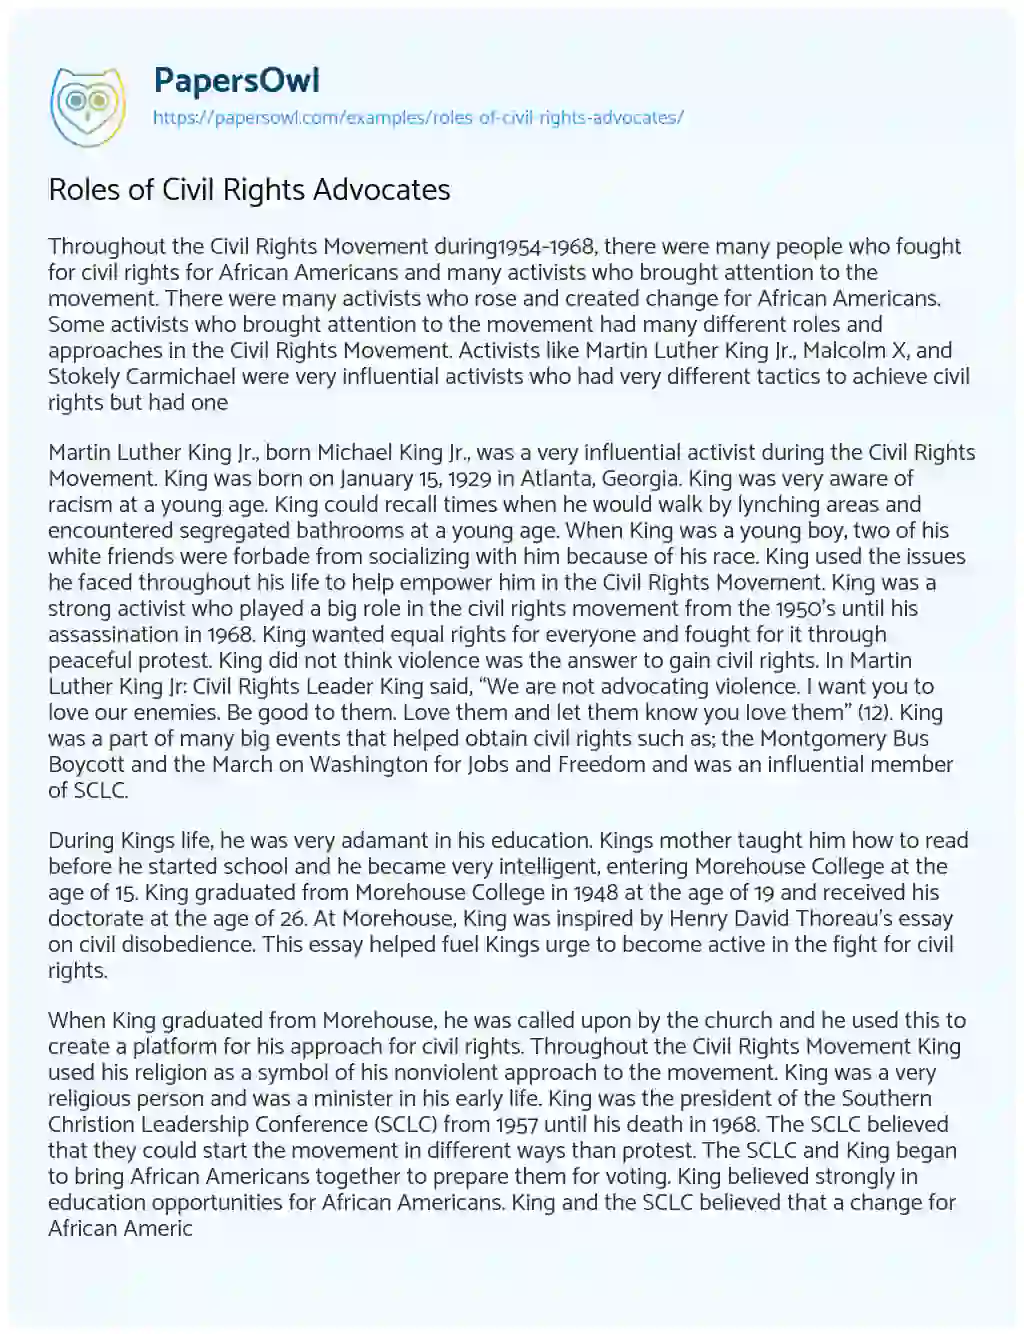 Roles of Civil Rights Advocates essay